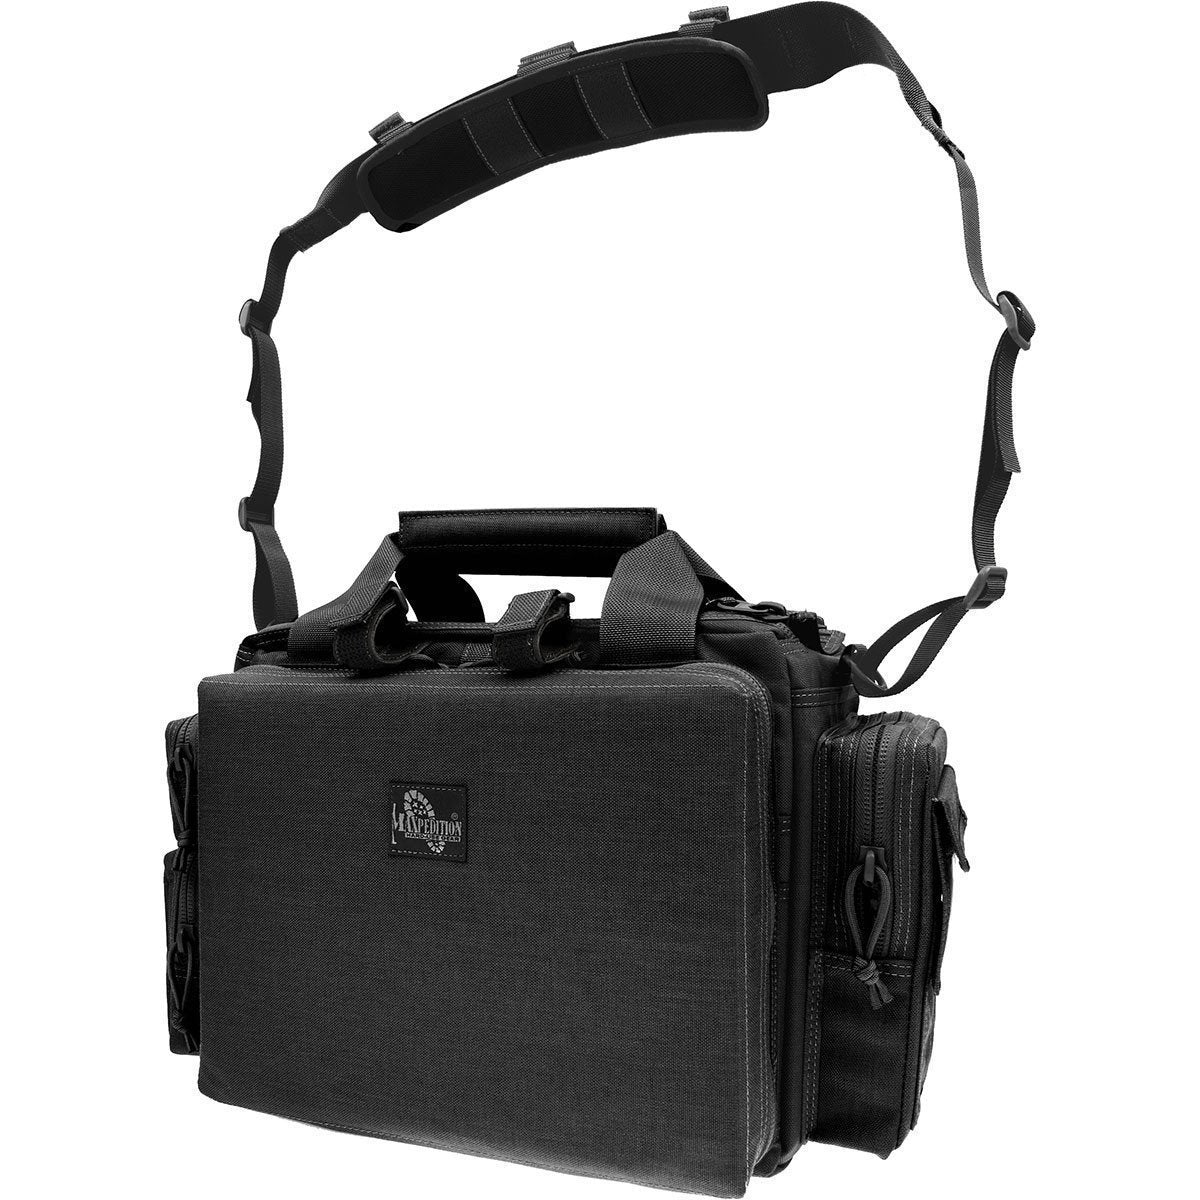 Maxpedition MPB Multi Purpose Bag - Black Bags, Packs and Cases Maxpedition Tactical Gear Supplier Tactical Distributors Australia